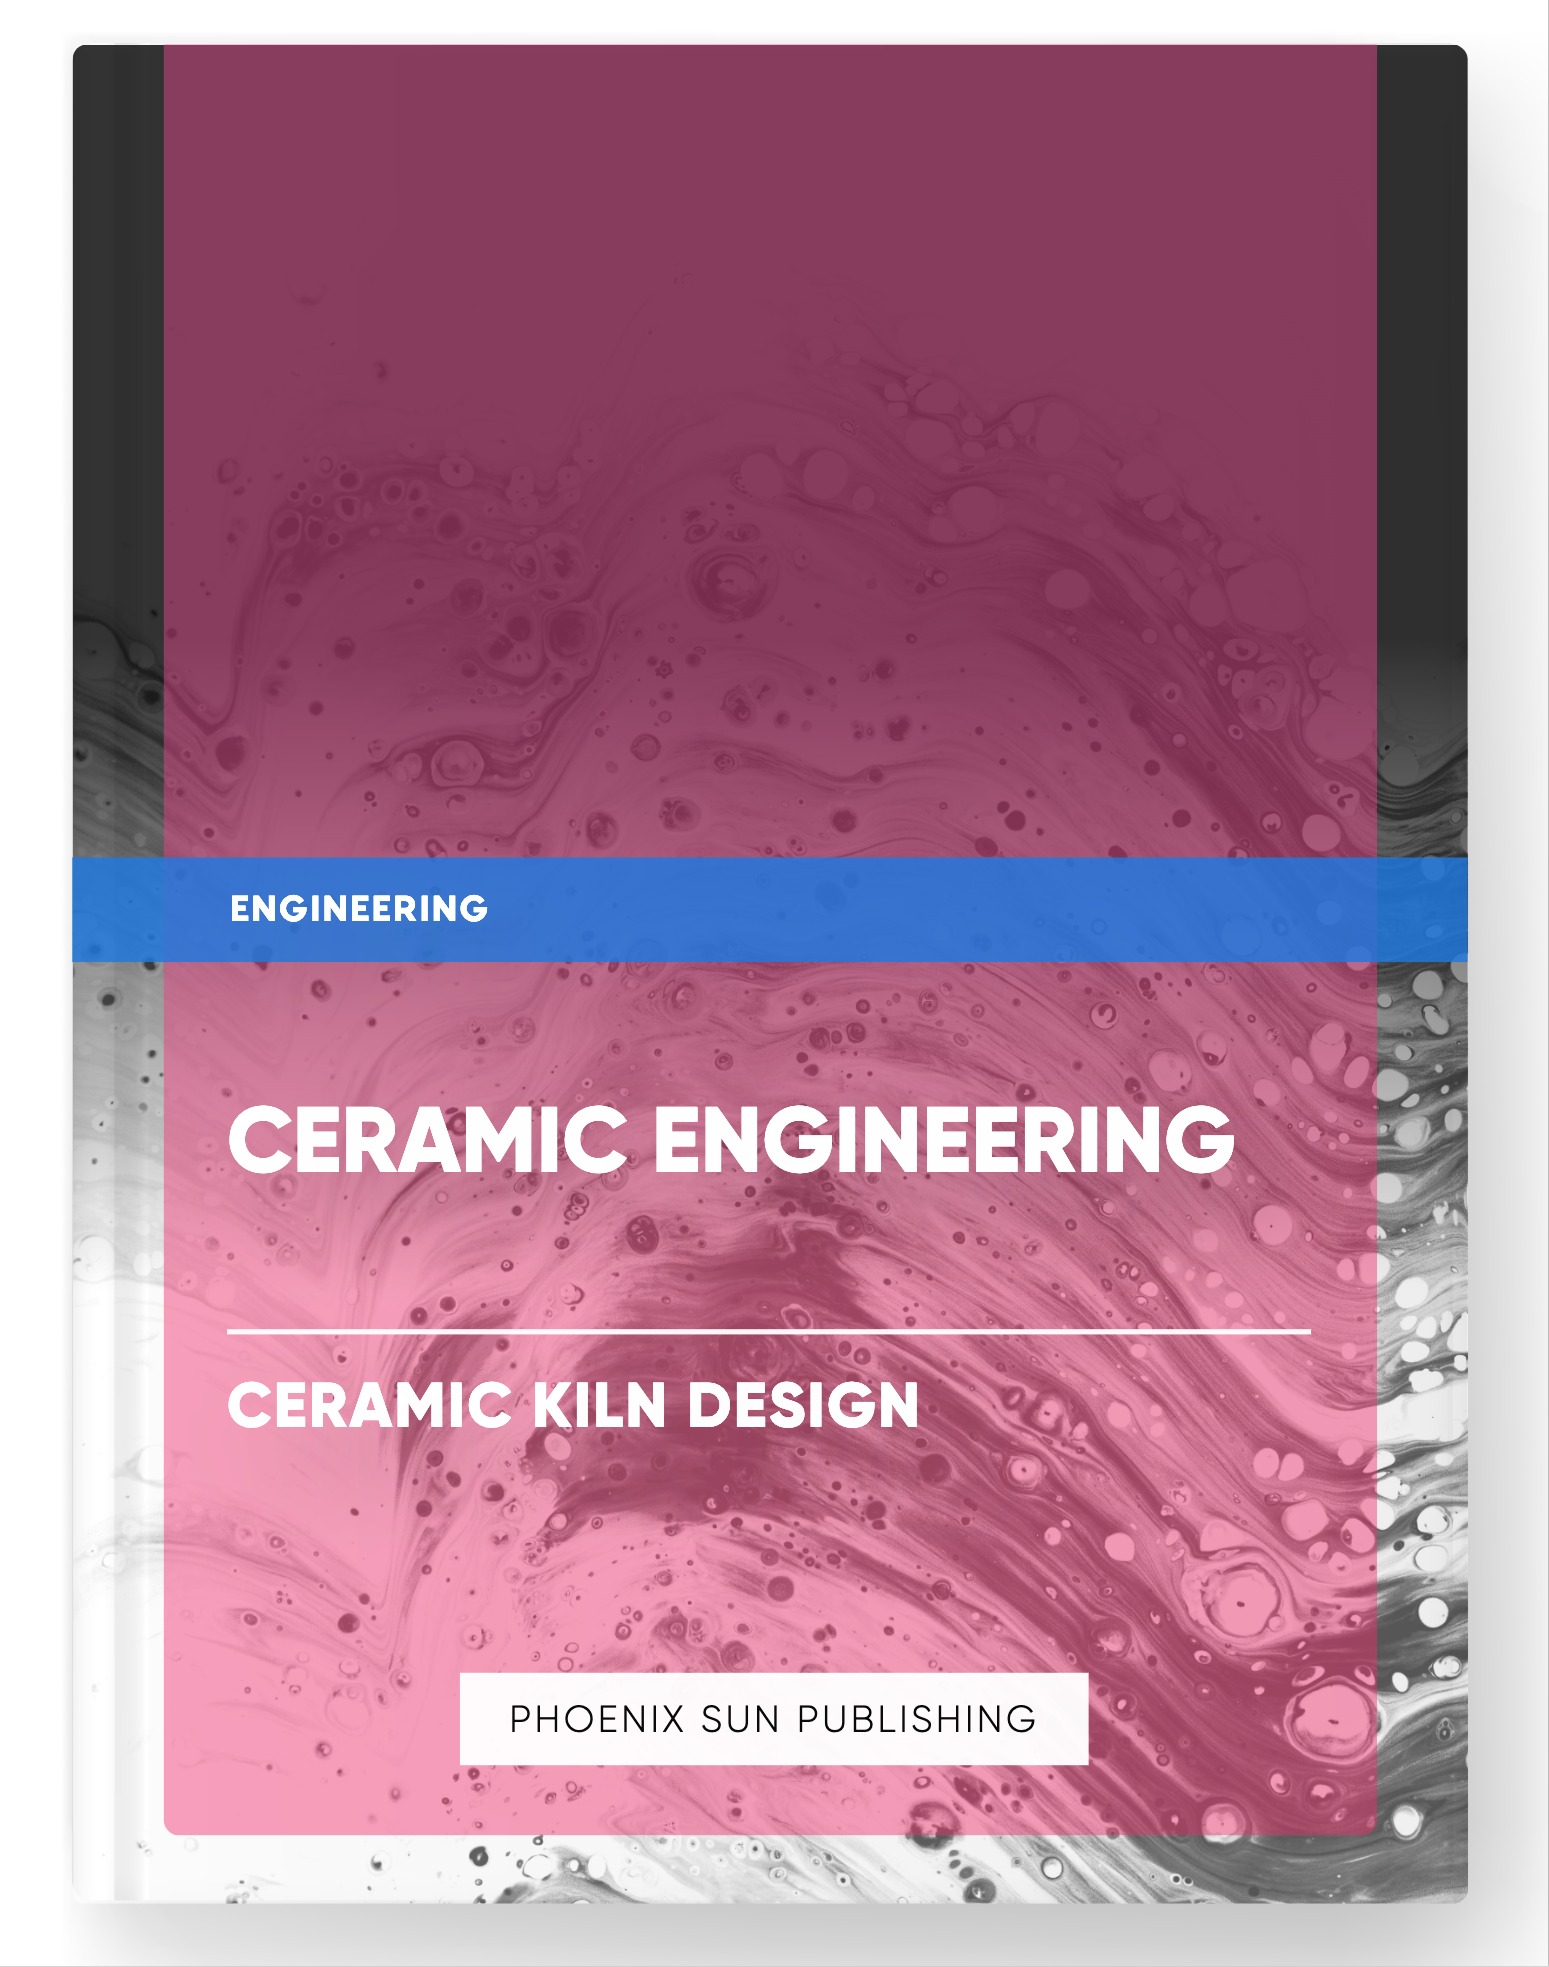 Ceramic Engineering – Ceramic Kiln Design